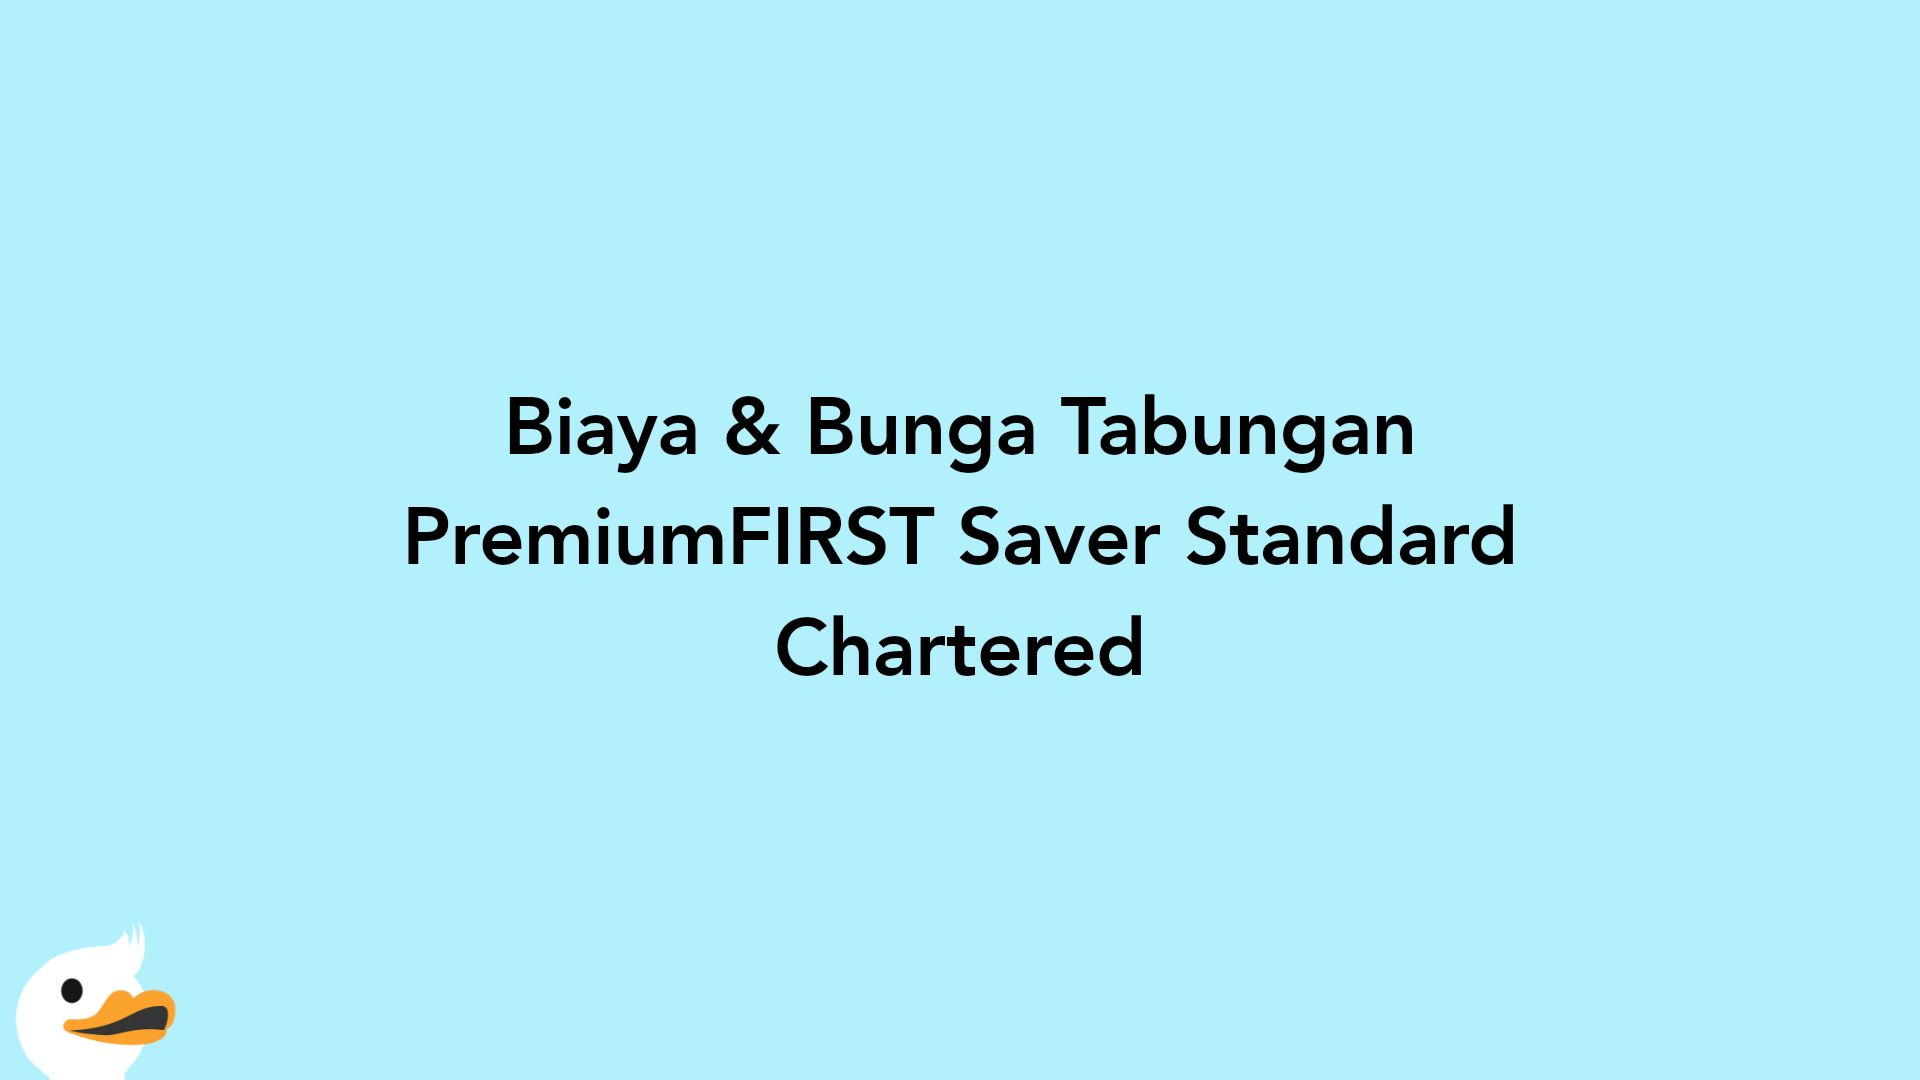 Biaya & Bunga Tabungan PremiumFIRST Saver Standard Chartered